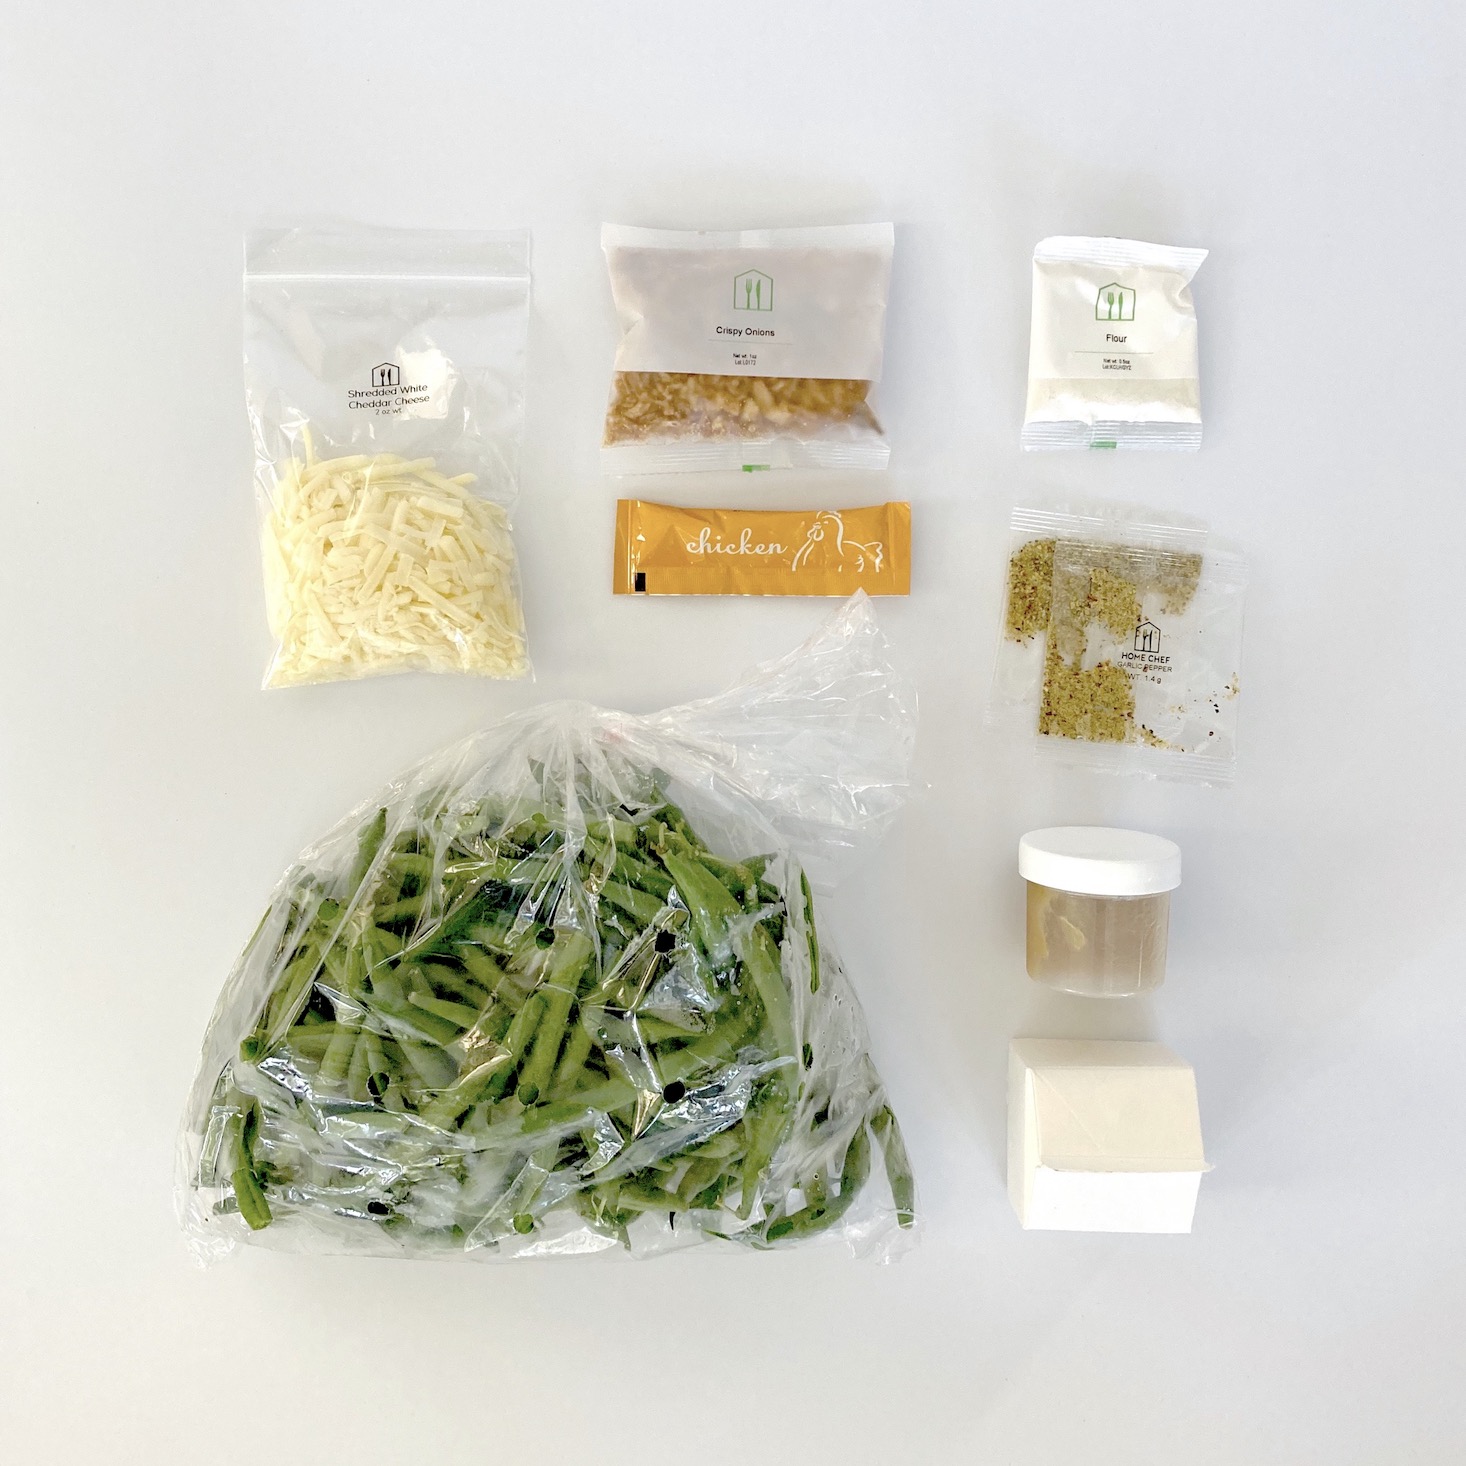 Green Bean Casserole Ingredients